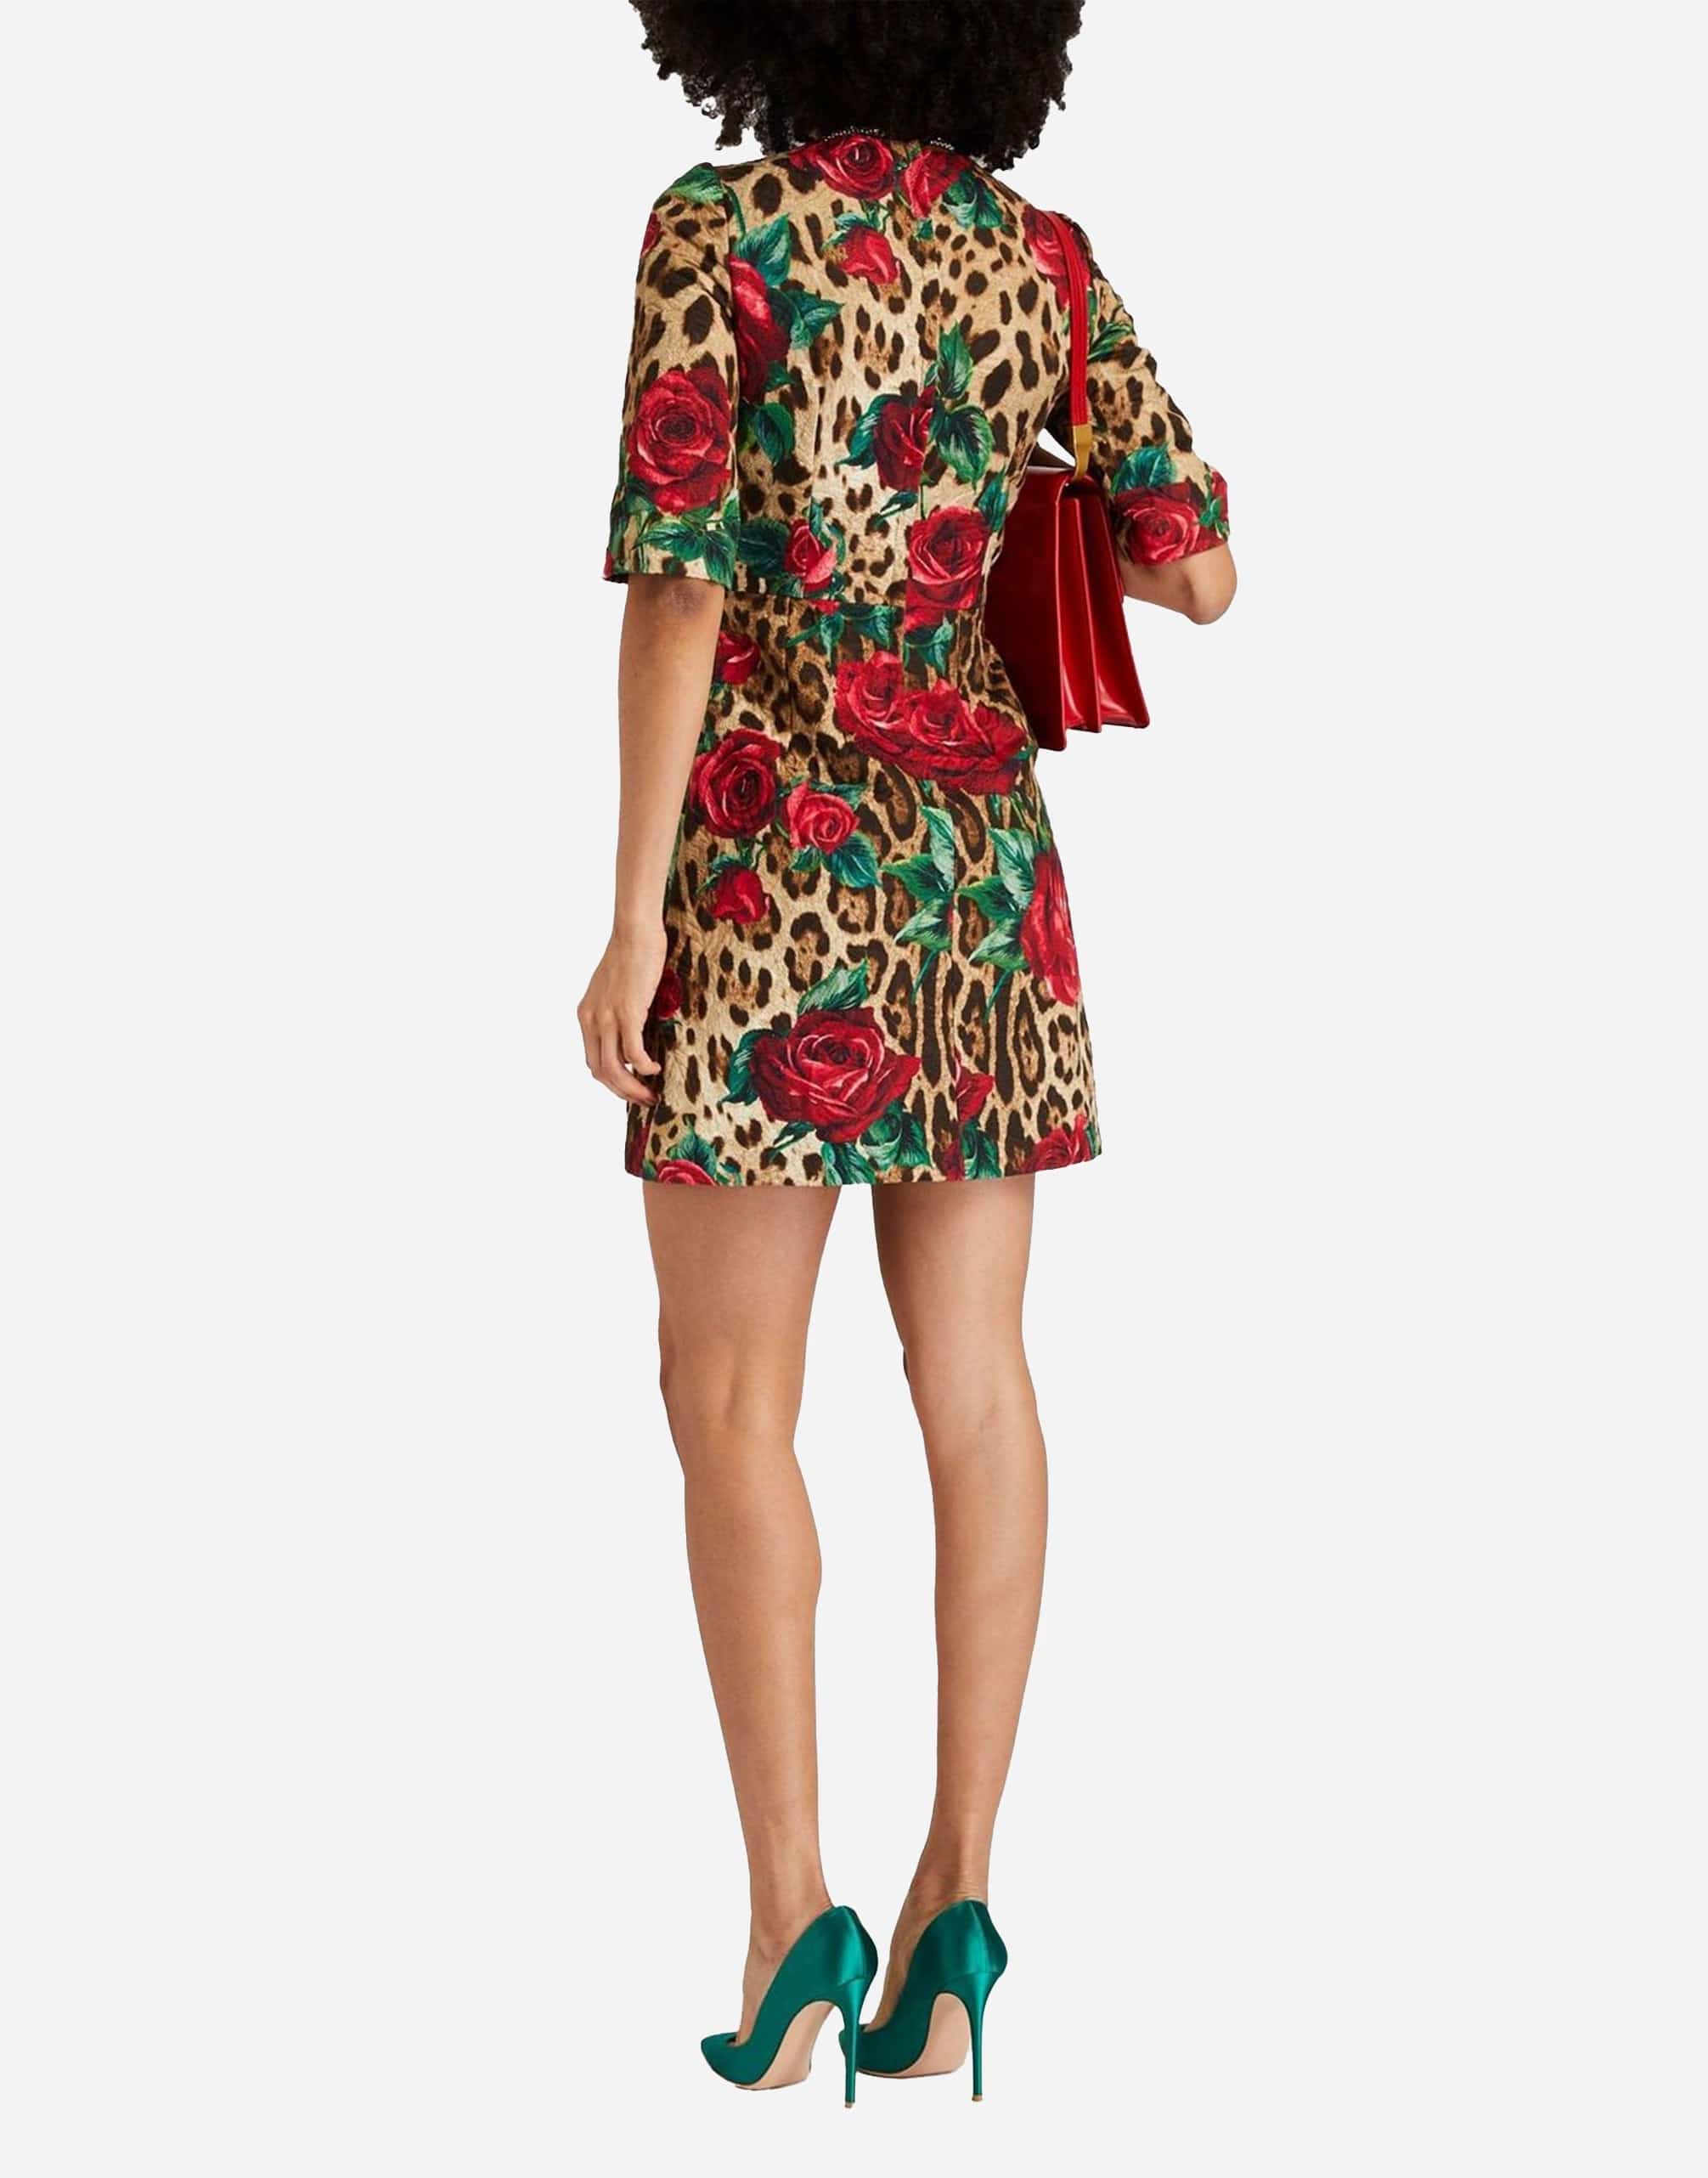 Dolce & Gabbana Leopard Print Cotton-Blend Mini Dress